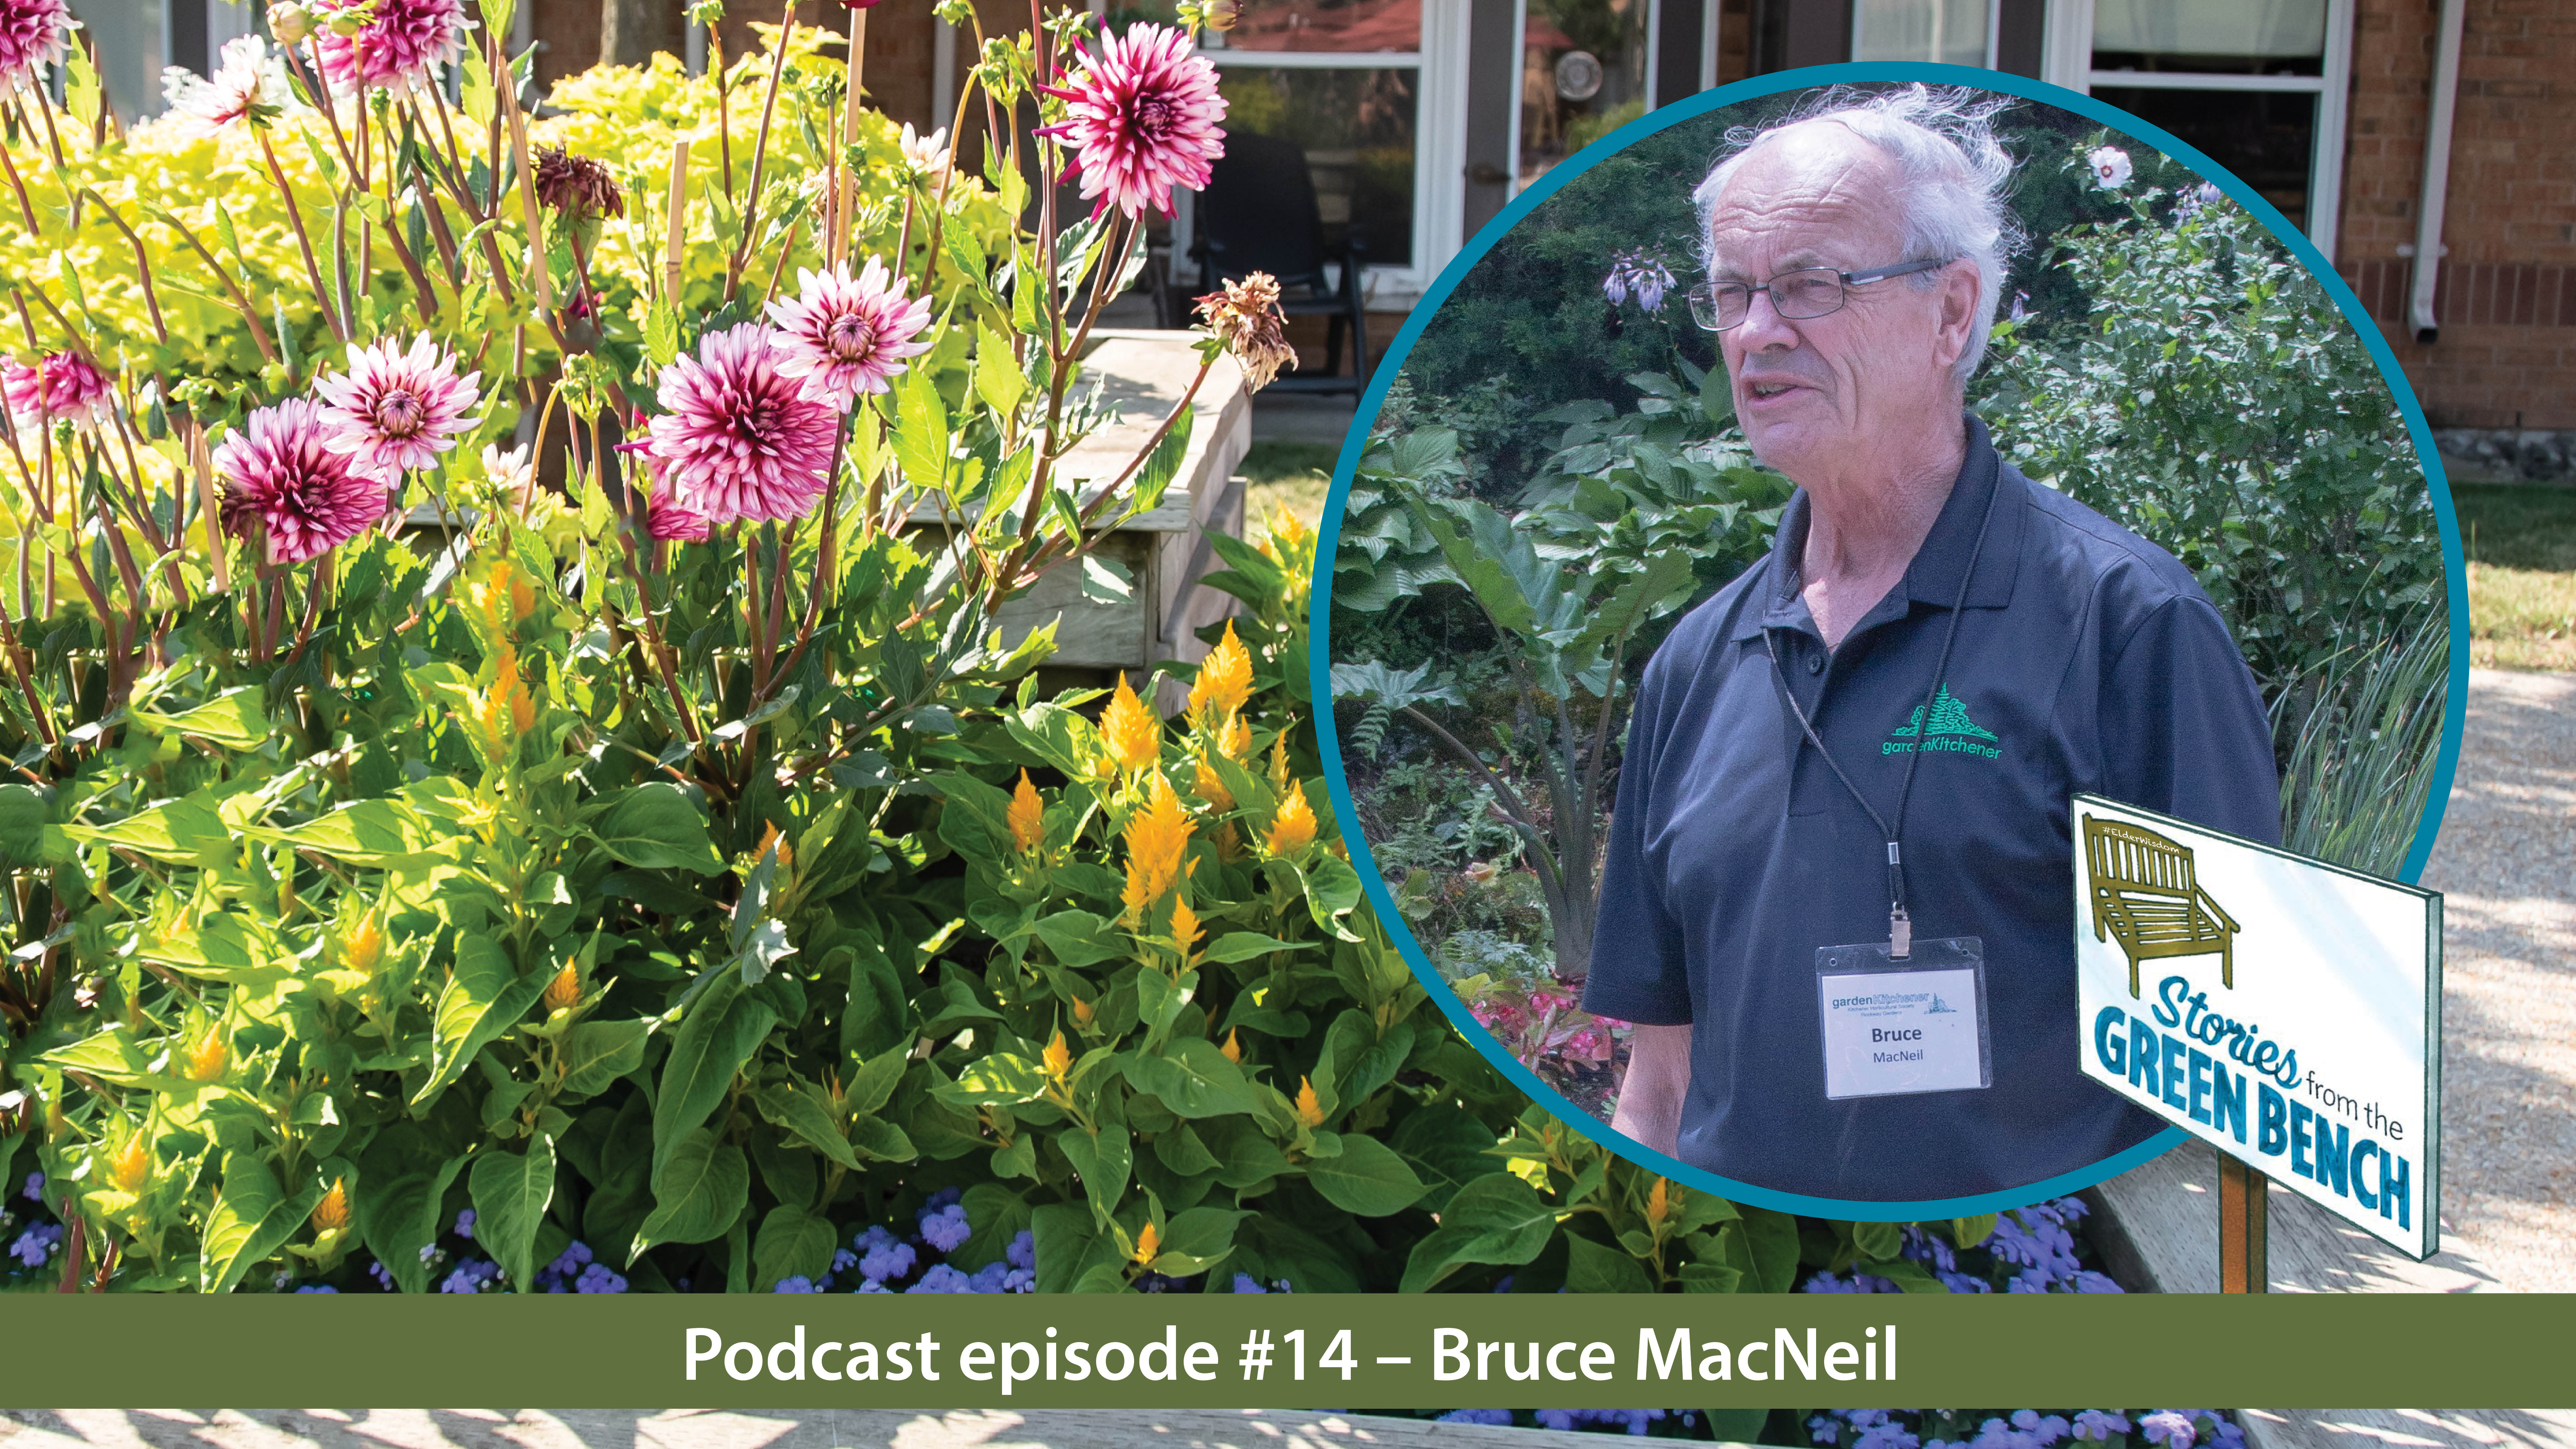 Bruce MacNeil, volunteer and gardener at The Village of Winston Park